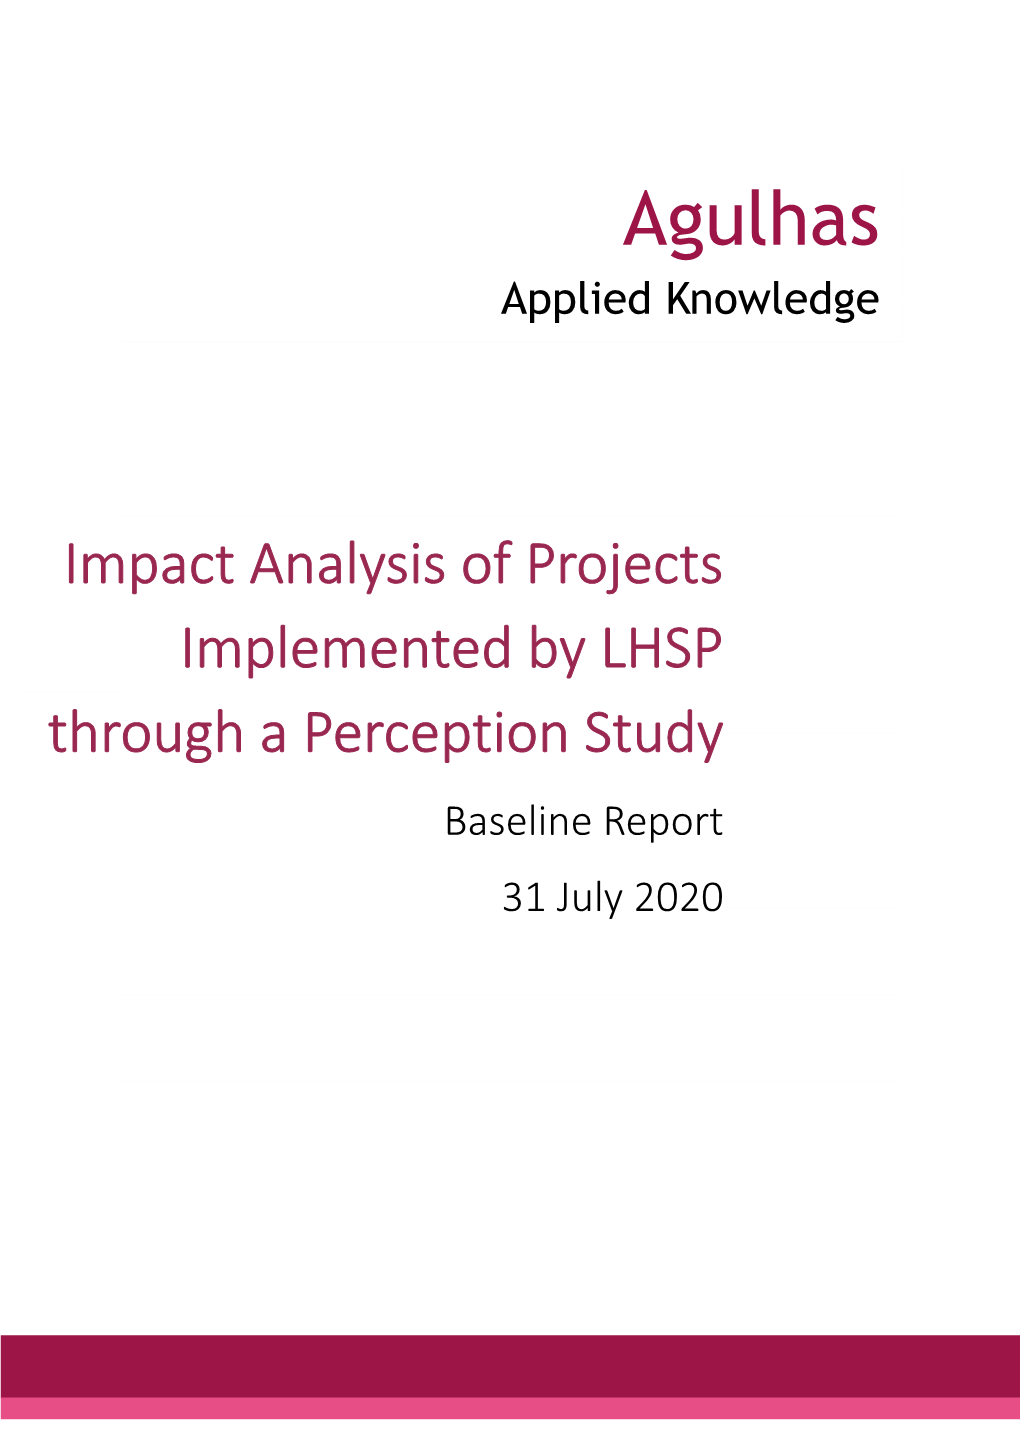 200831 Baseline Report.Pdf